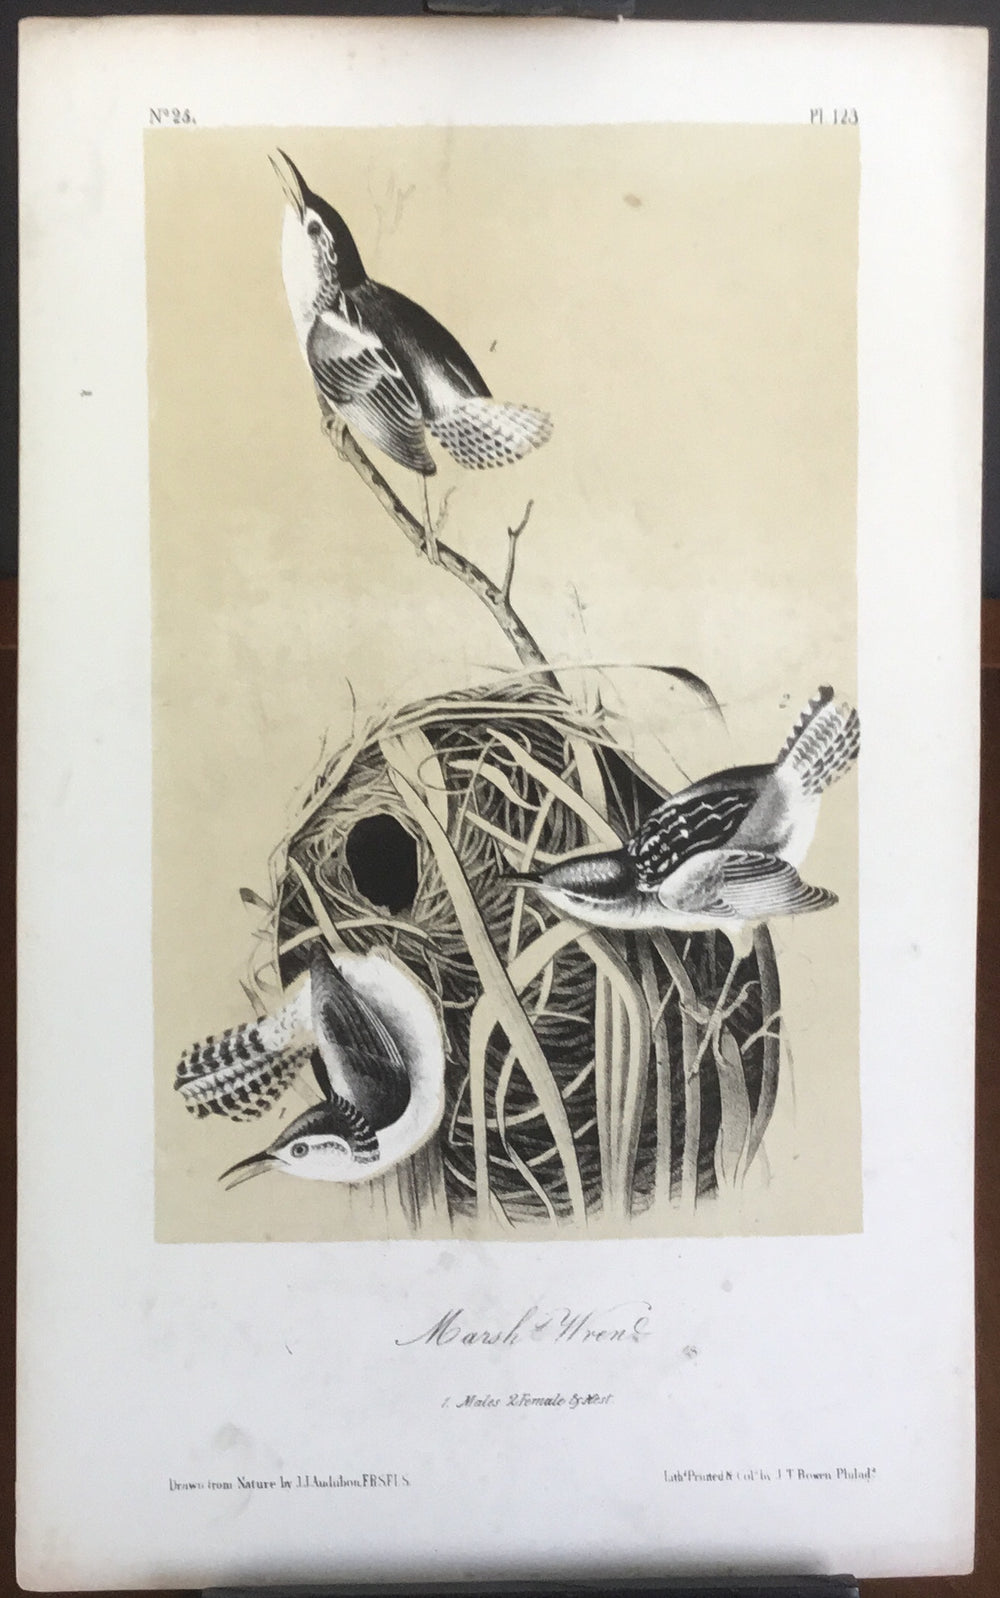 Audubon Octavo Marsh Wren, plate 123, uncolored test sheet, 7 x 11